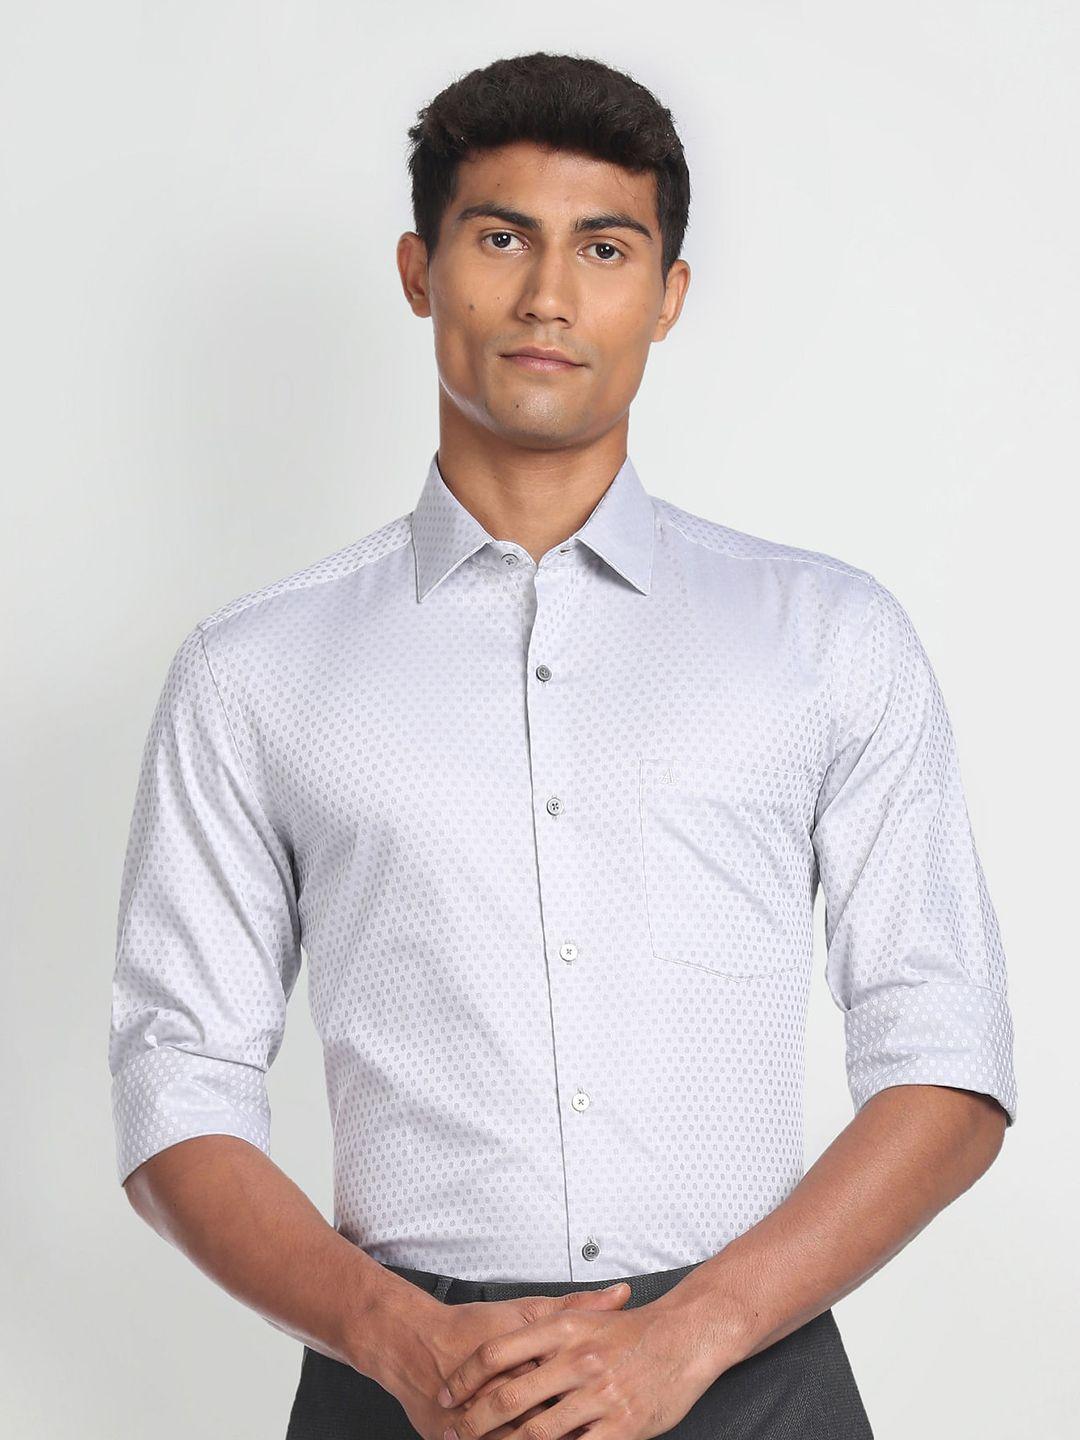 arrow textured self design spread collar chest pocket pure cotton formal shirt